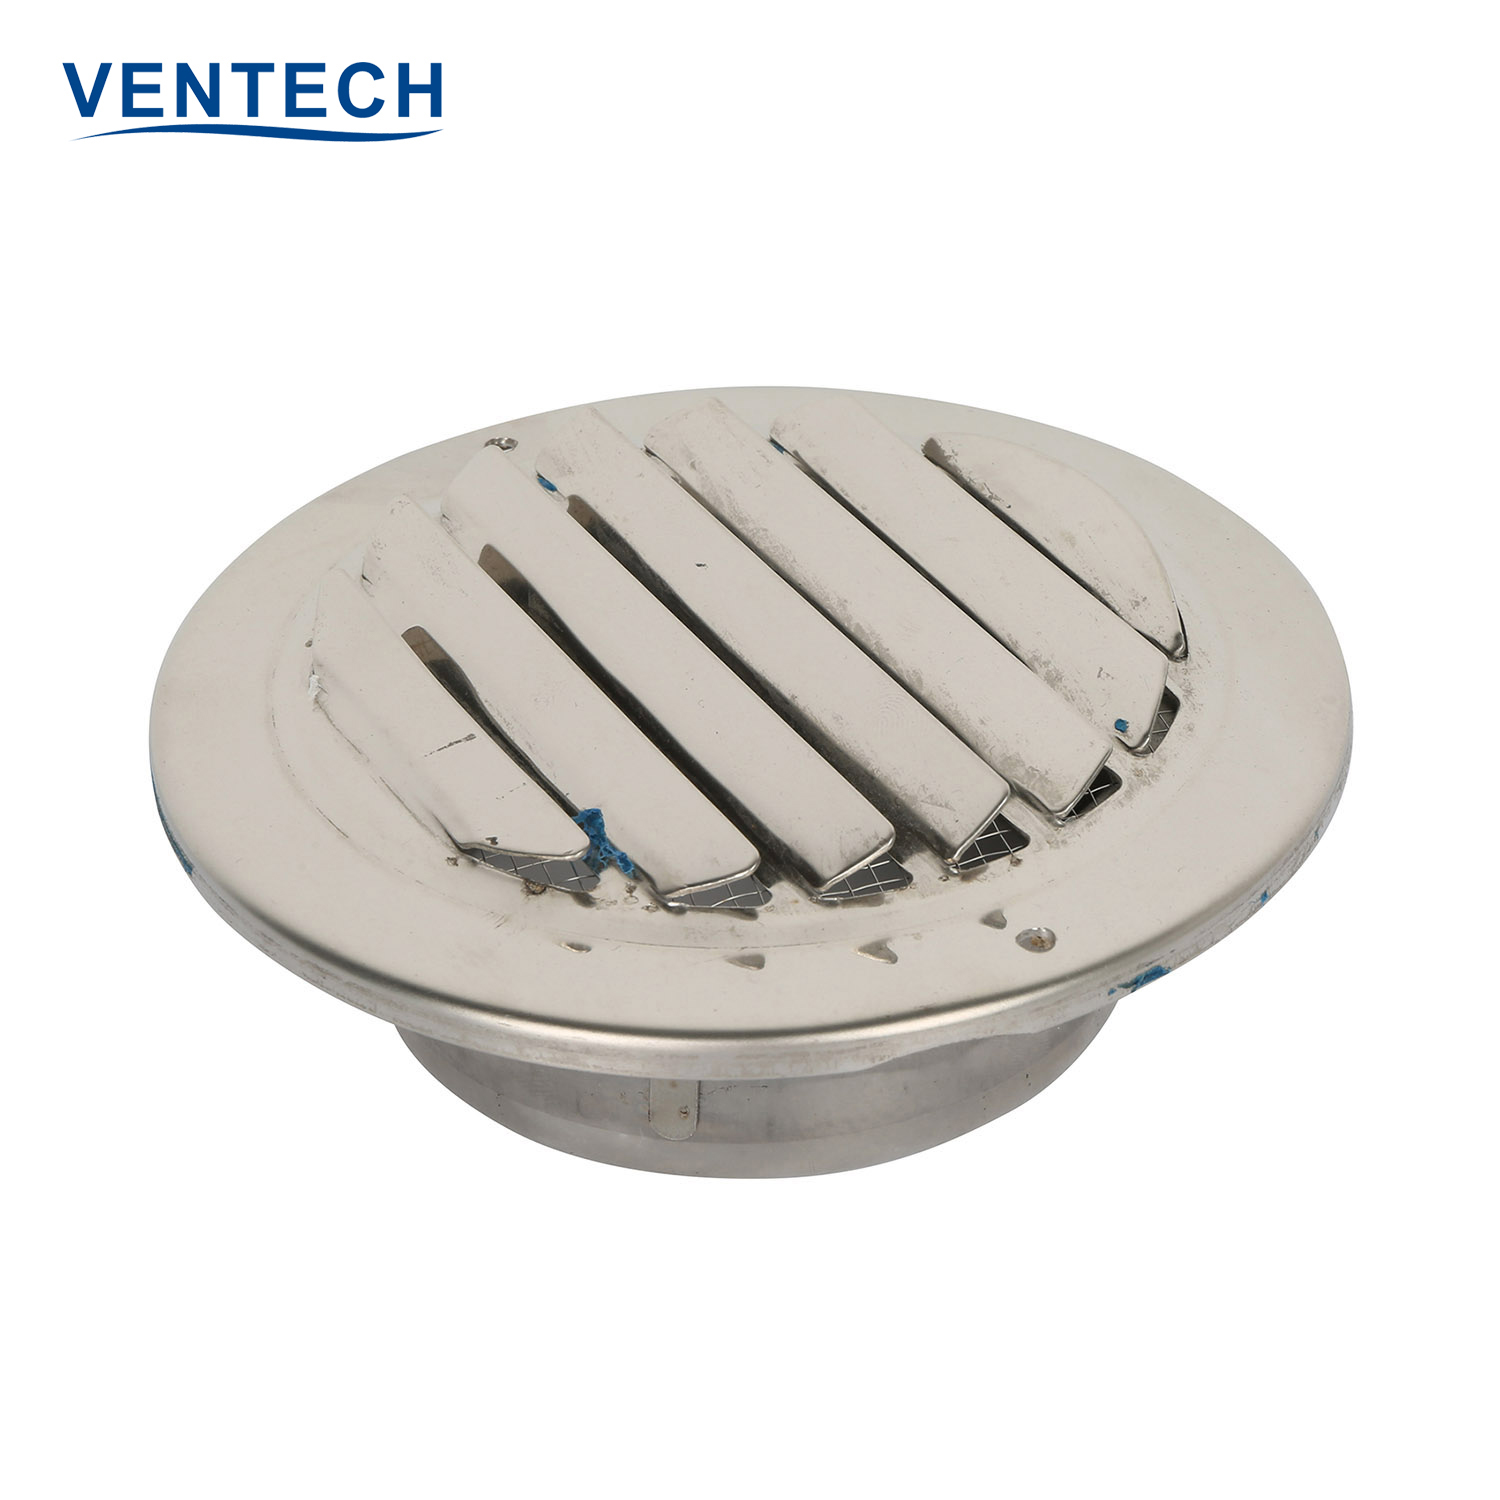 Ventech reliable ventilation louver grilles best supplier for air conditioning-2